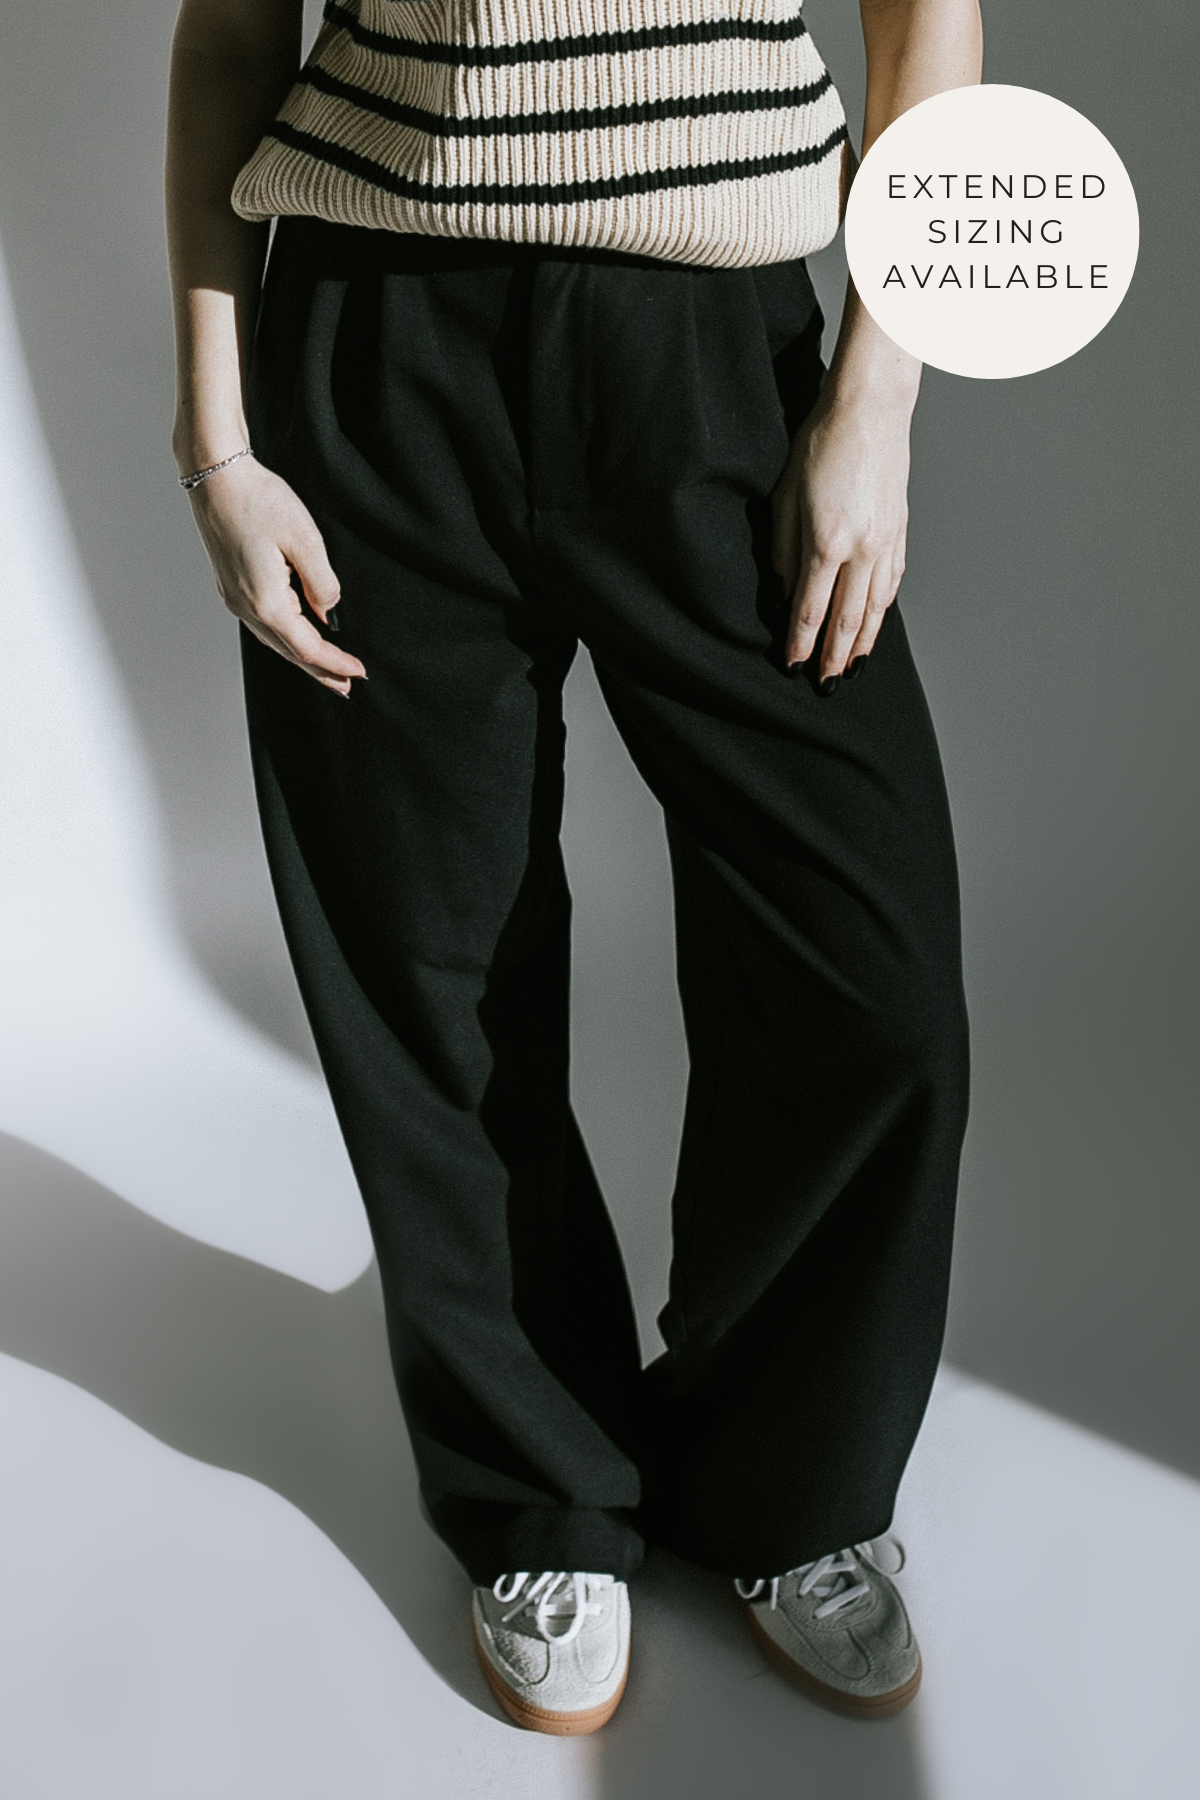 Grey Extension & Button Pants Shorts Jeans Trouser Waist Expander Extend  Size B | eBay